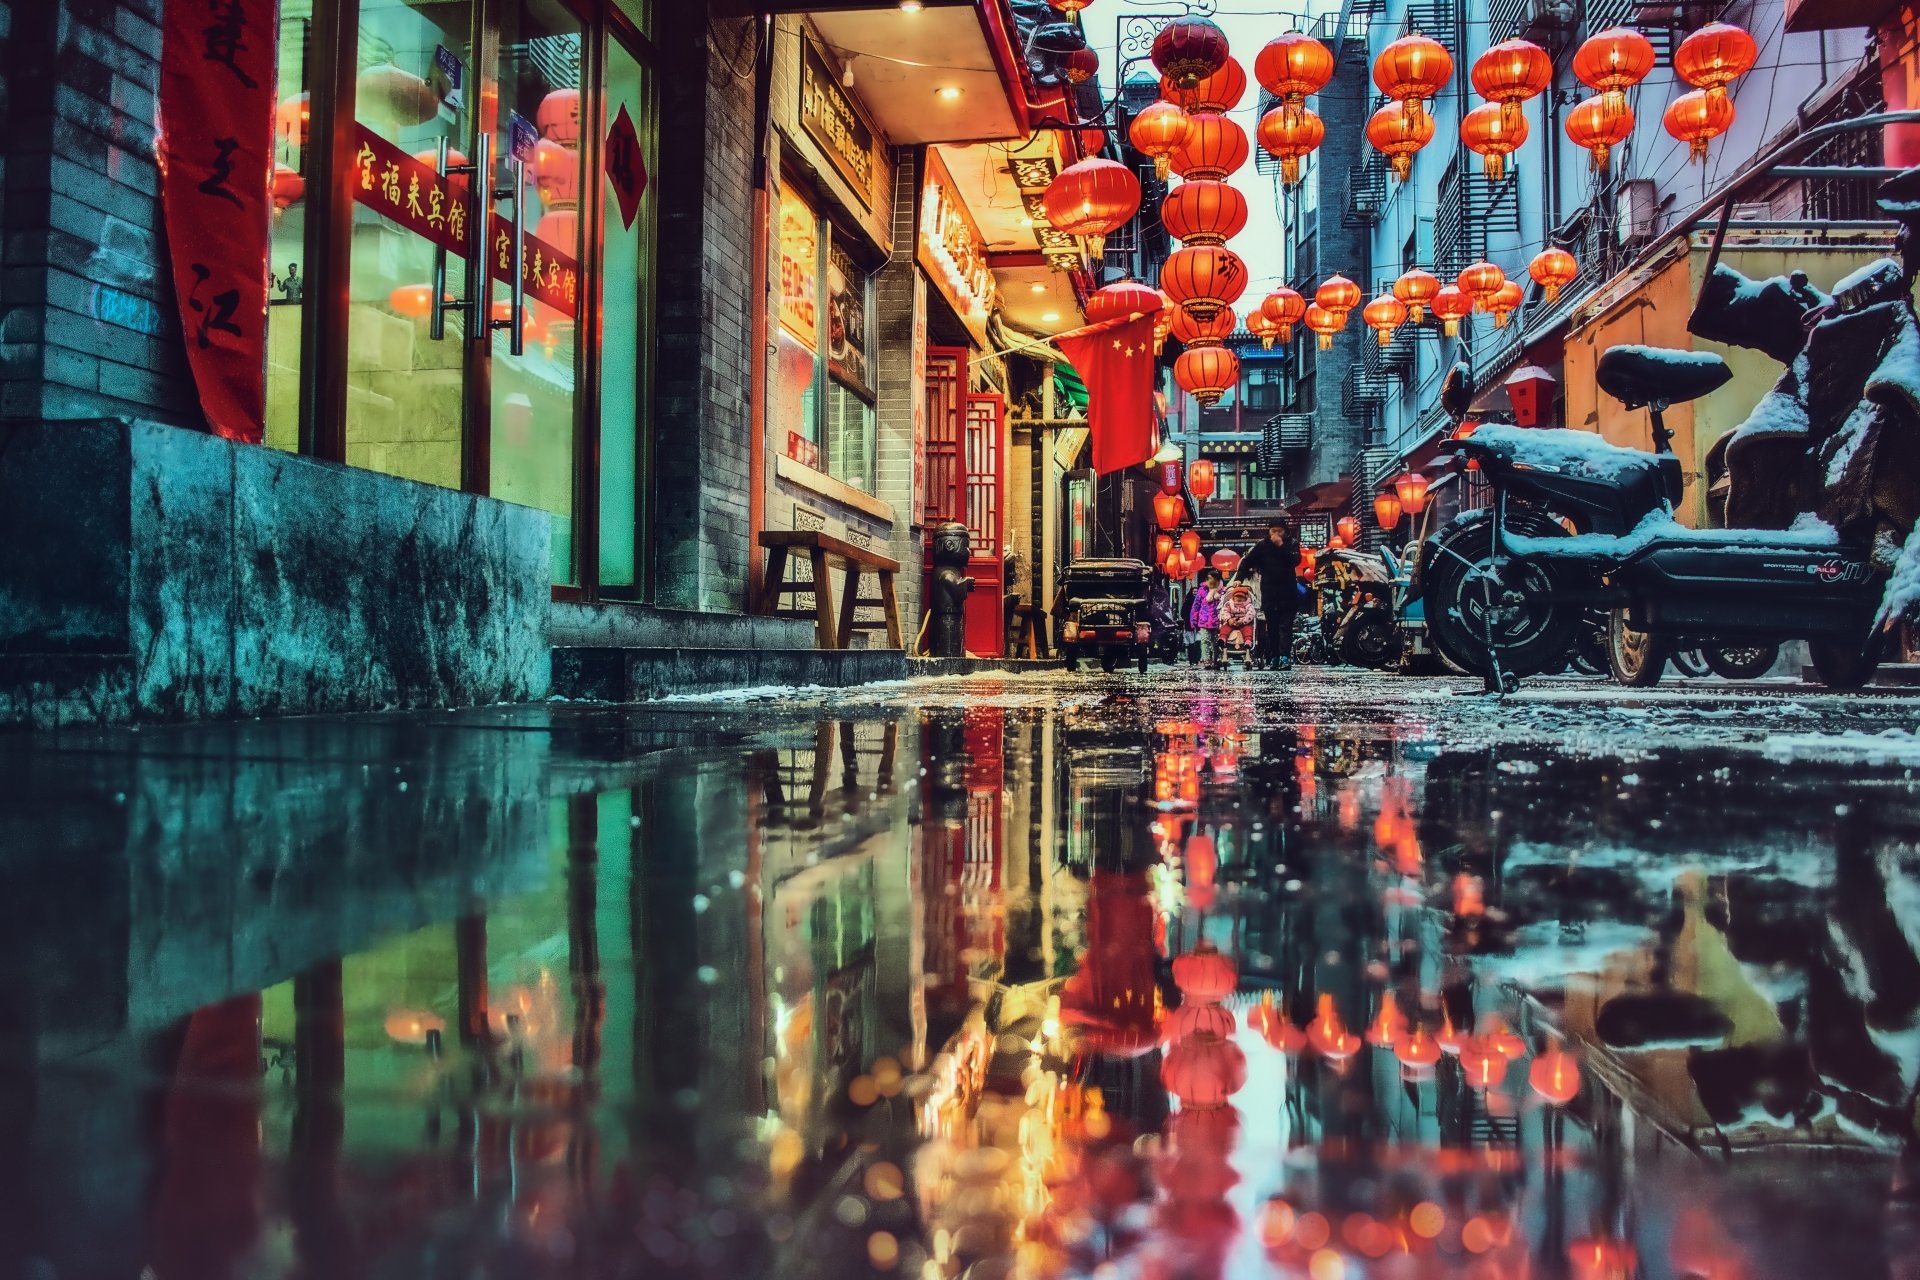 Download Chinatown Man Made Street 4k Ultra HD Wallpaper by zhang kaiyv